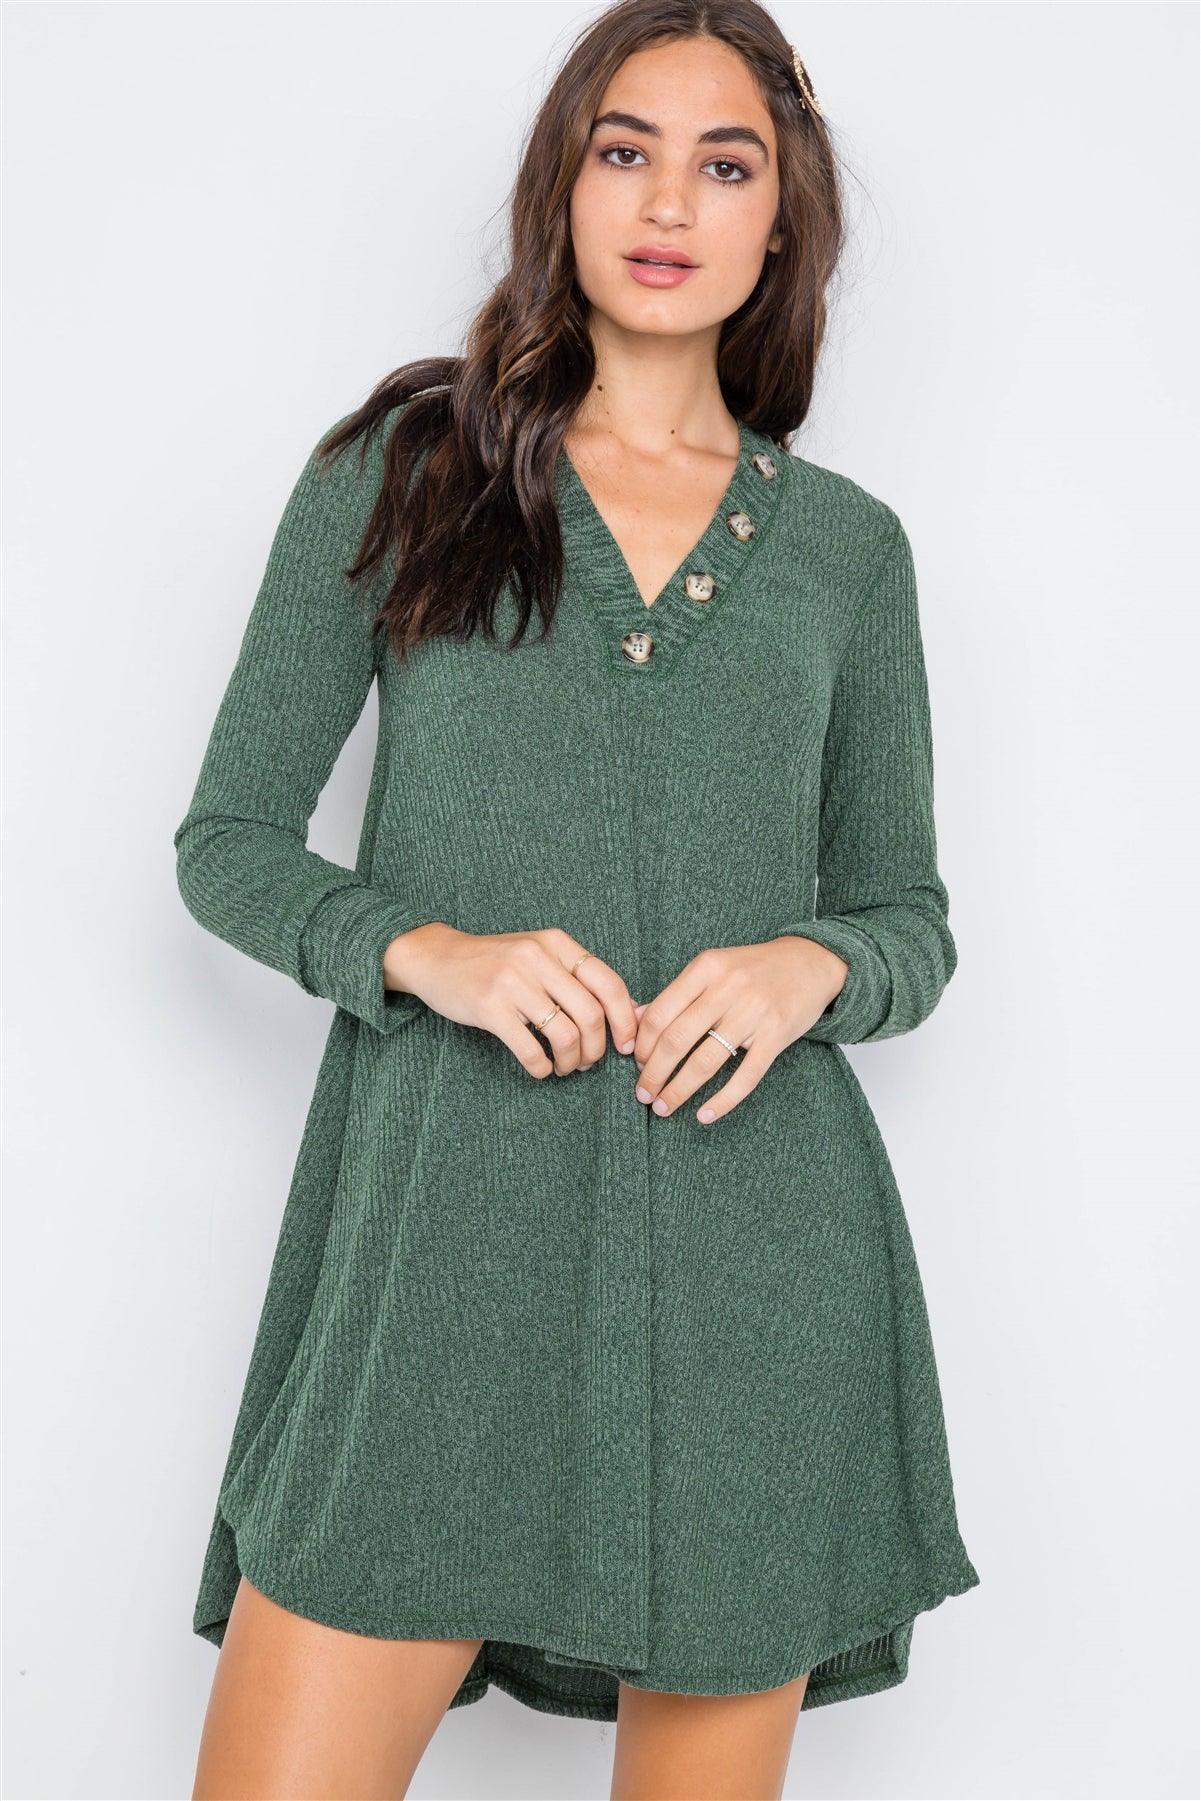 Hunter Green Knit Long Sleeve Sweater Dress /2-2